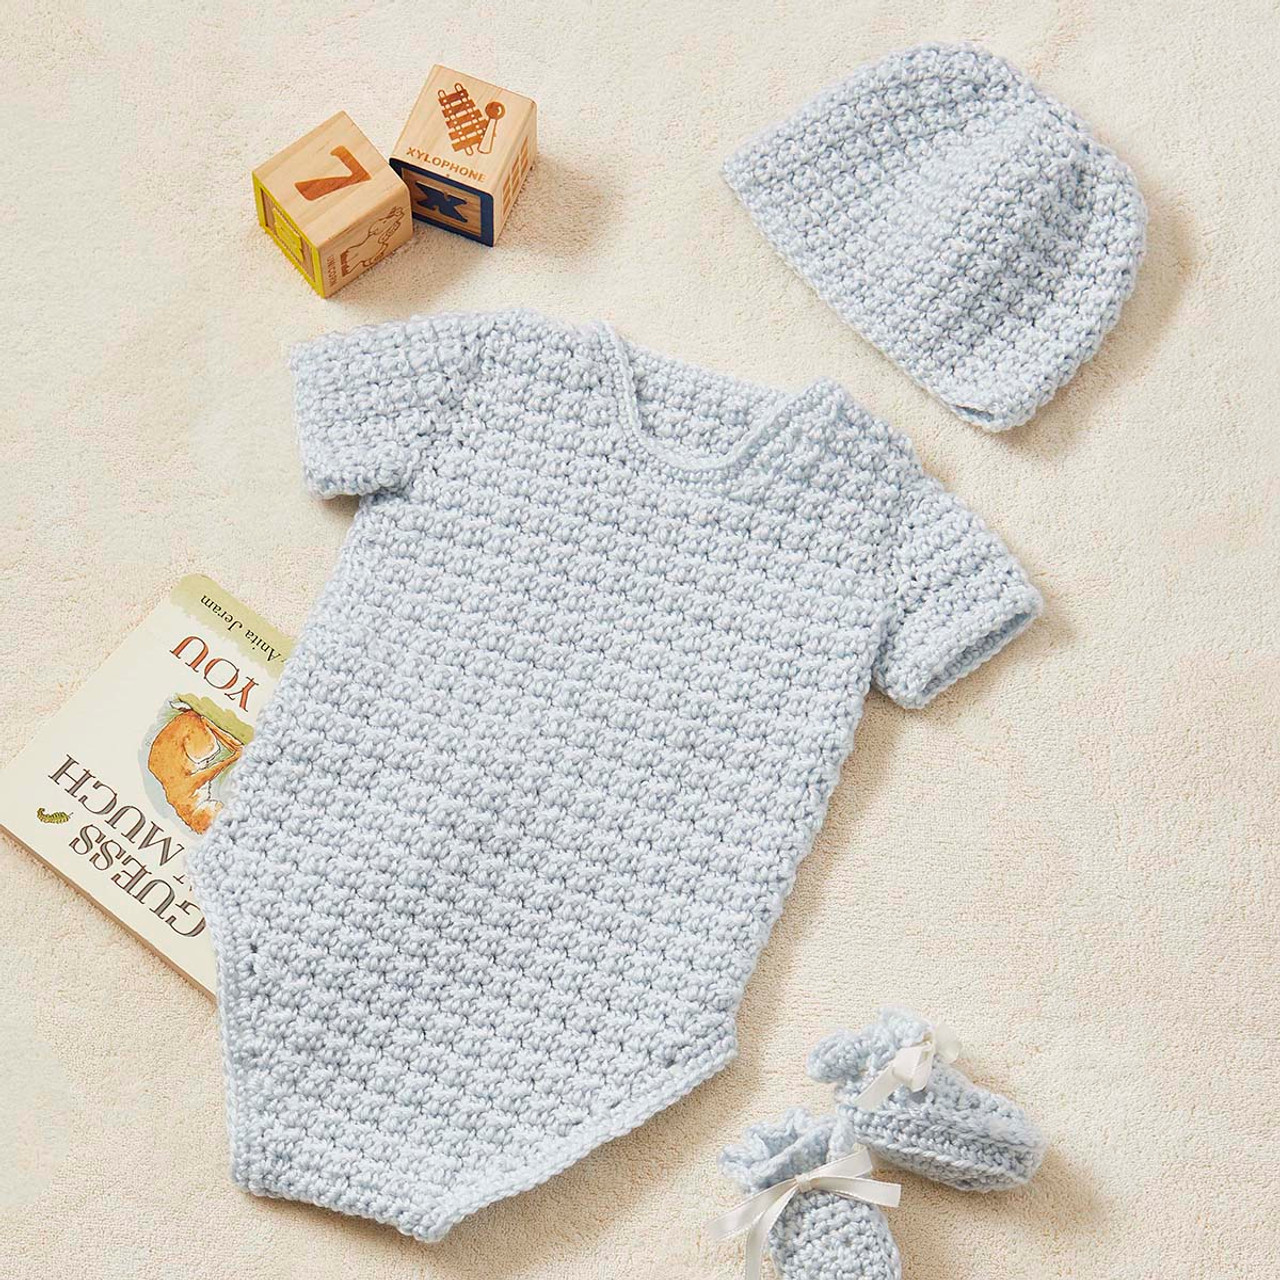 Herrschners Dreamy Baby Blanket Crochet Kit